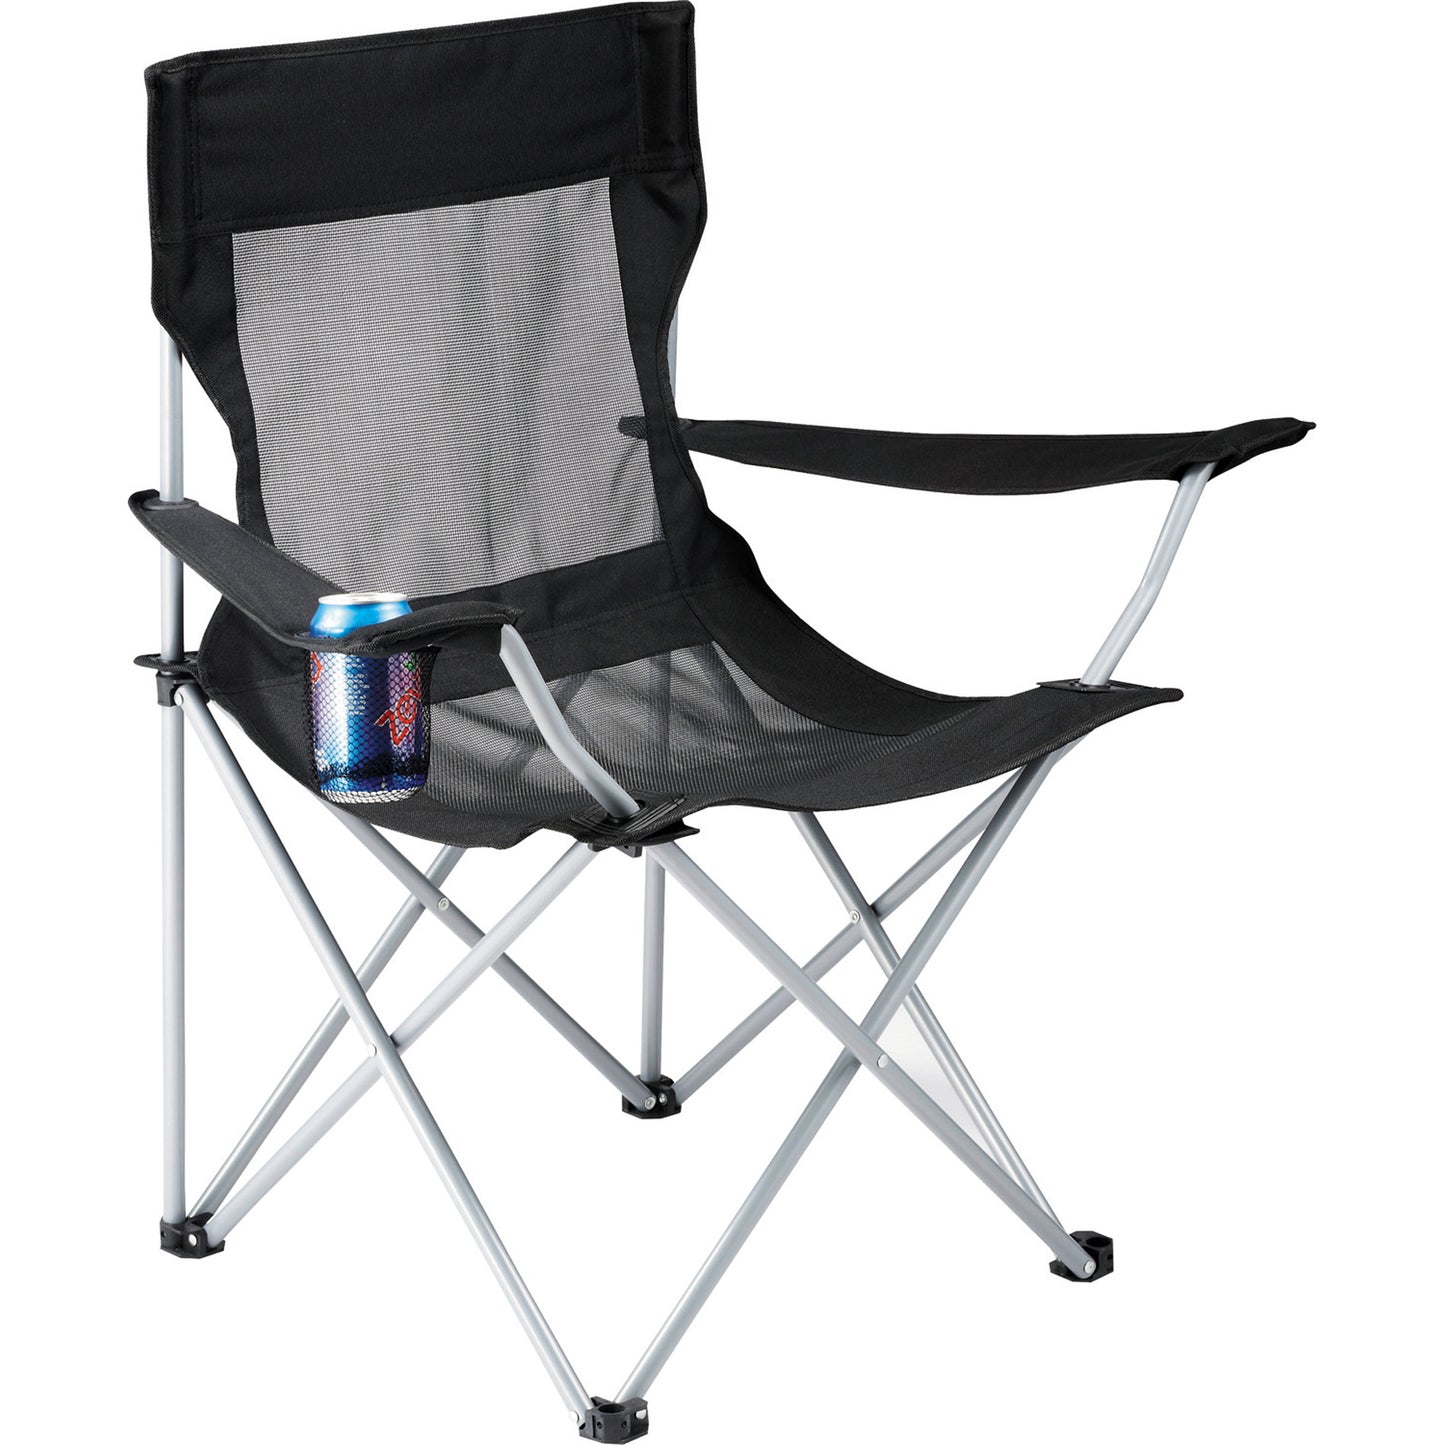 Mesh Camping Chair